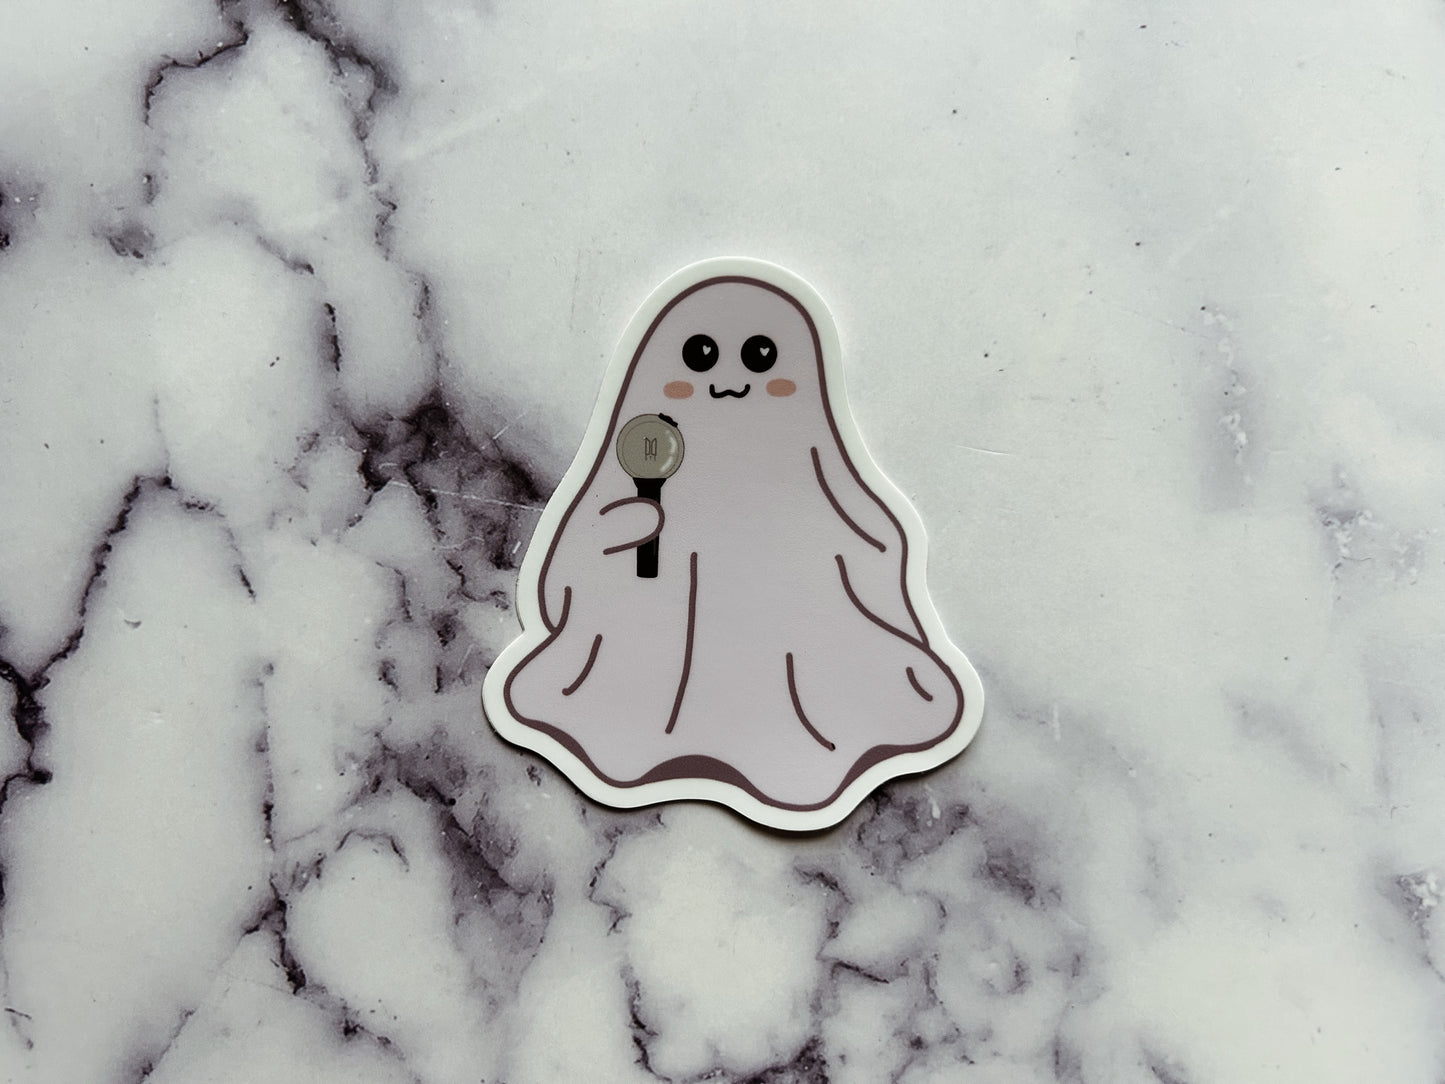 Kpop Ghost with Lightsticks Sticker